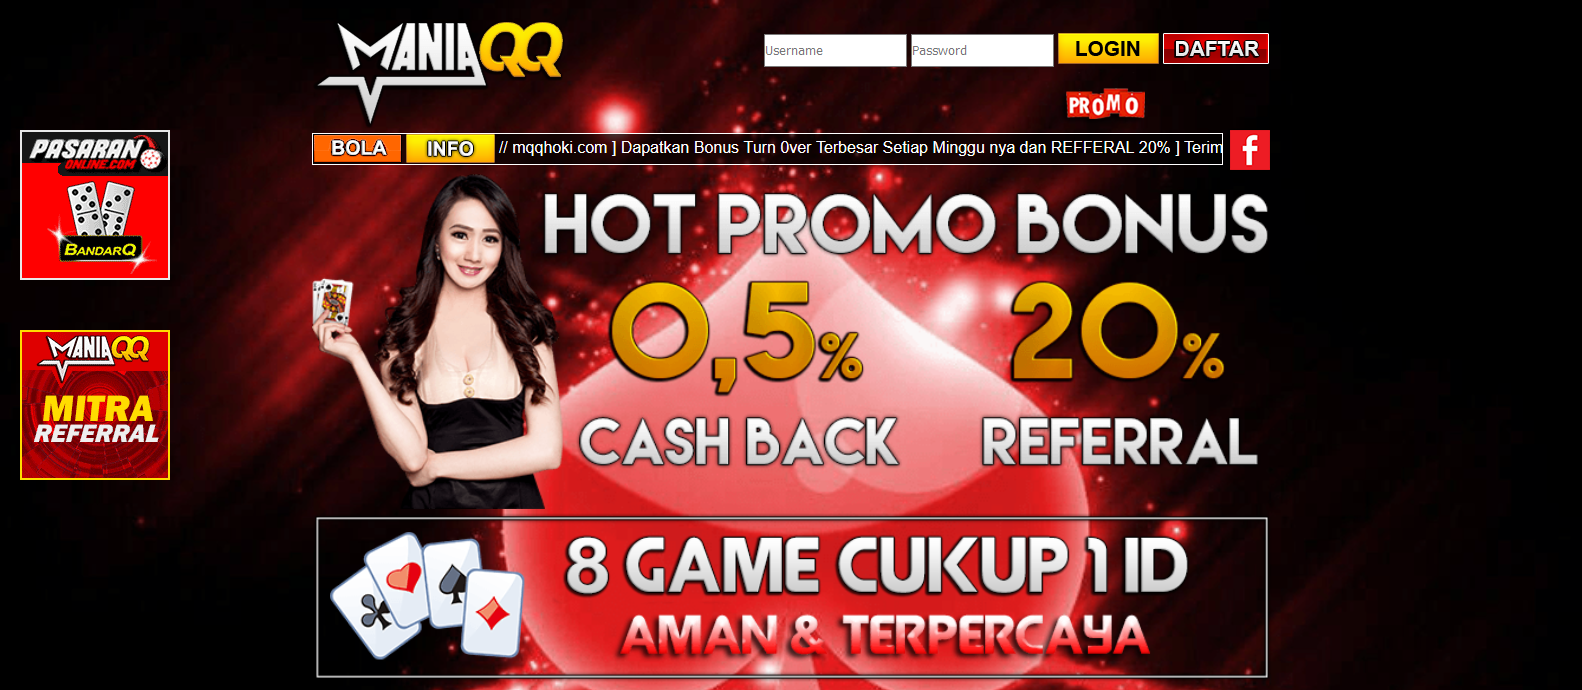 apply online casino dealer